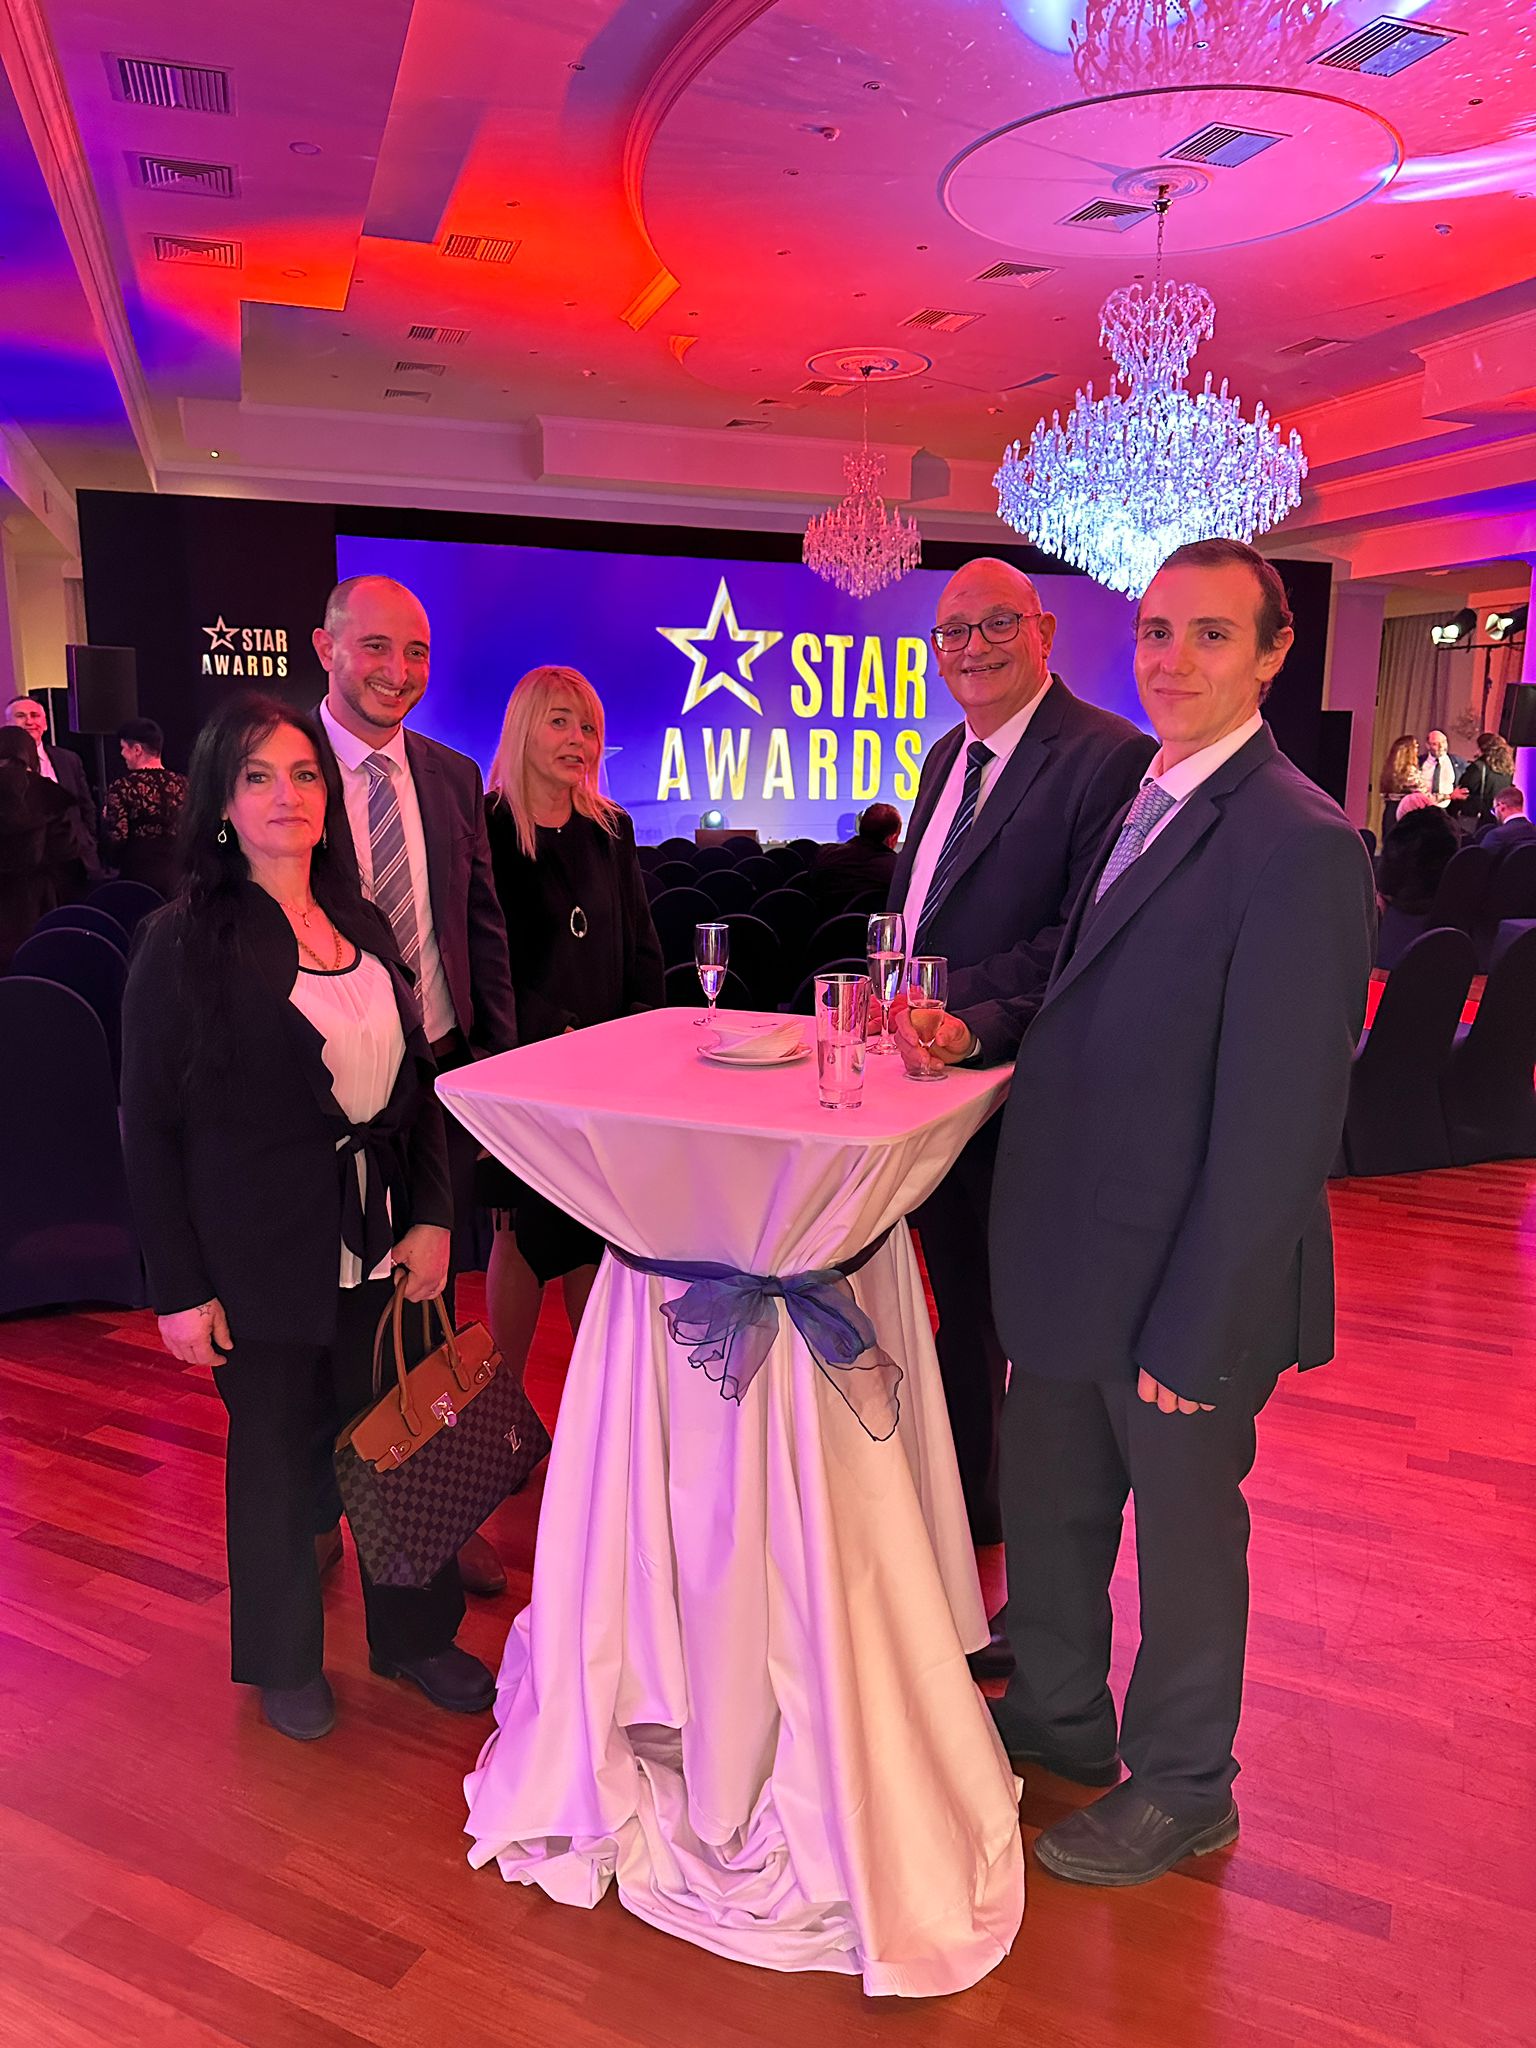 Mayflower Hotel Wins Award at the Malta Star Awards